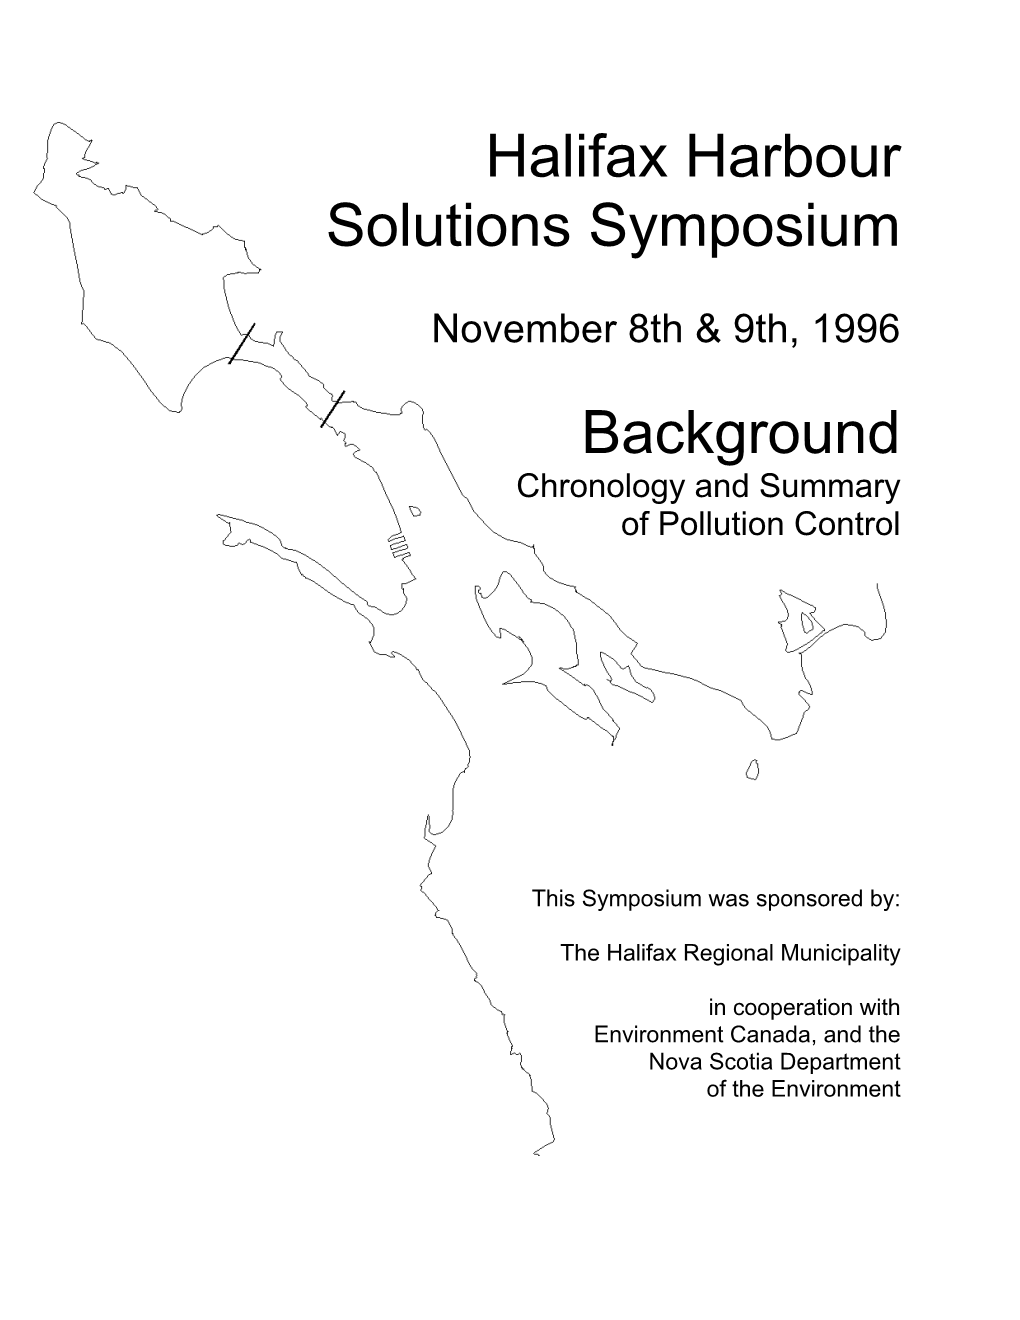 Harbour Solutions Symposium Background